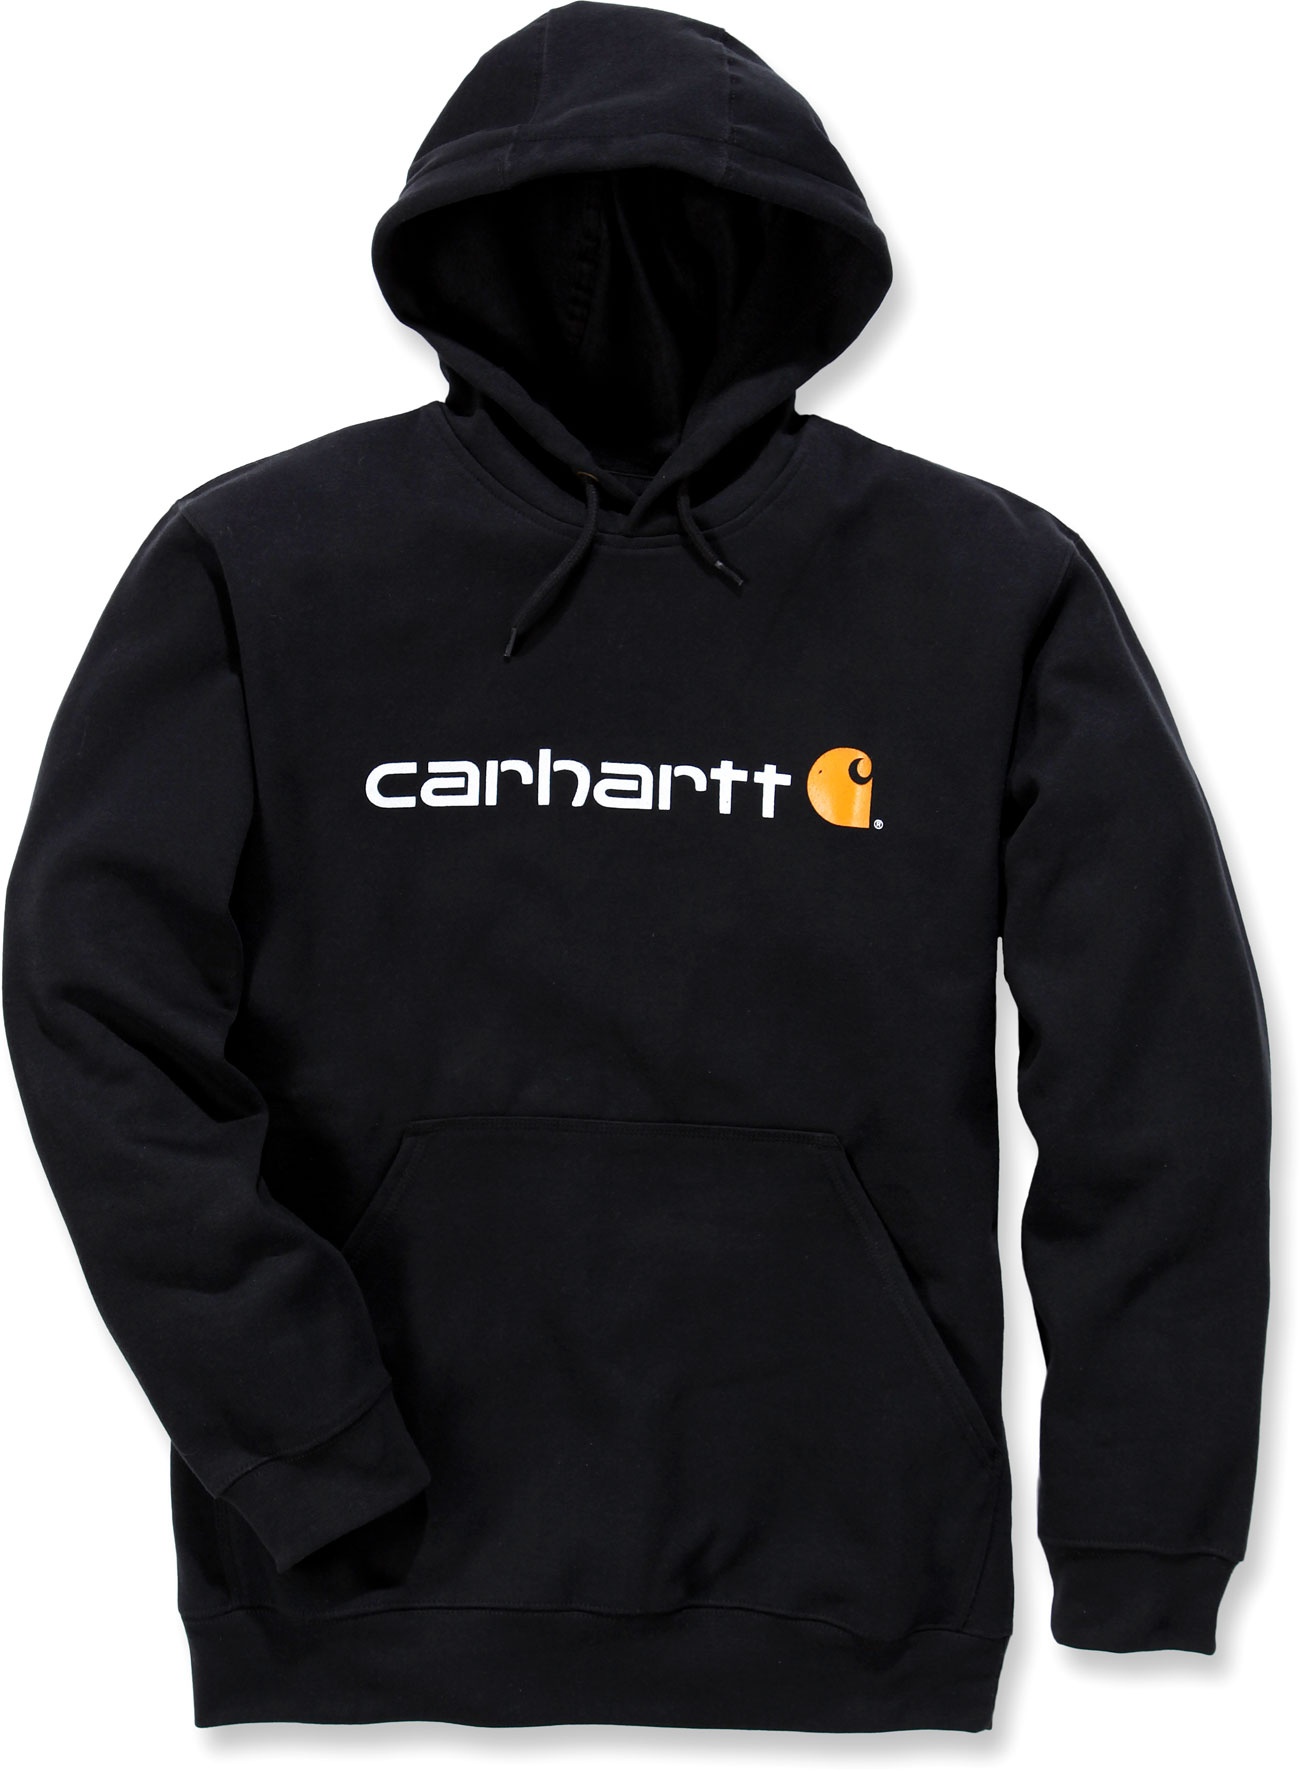 Carhartt Signature Logo, sweat à capuche - Noir - L